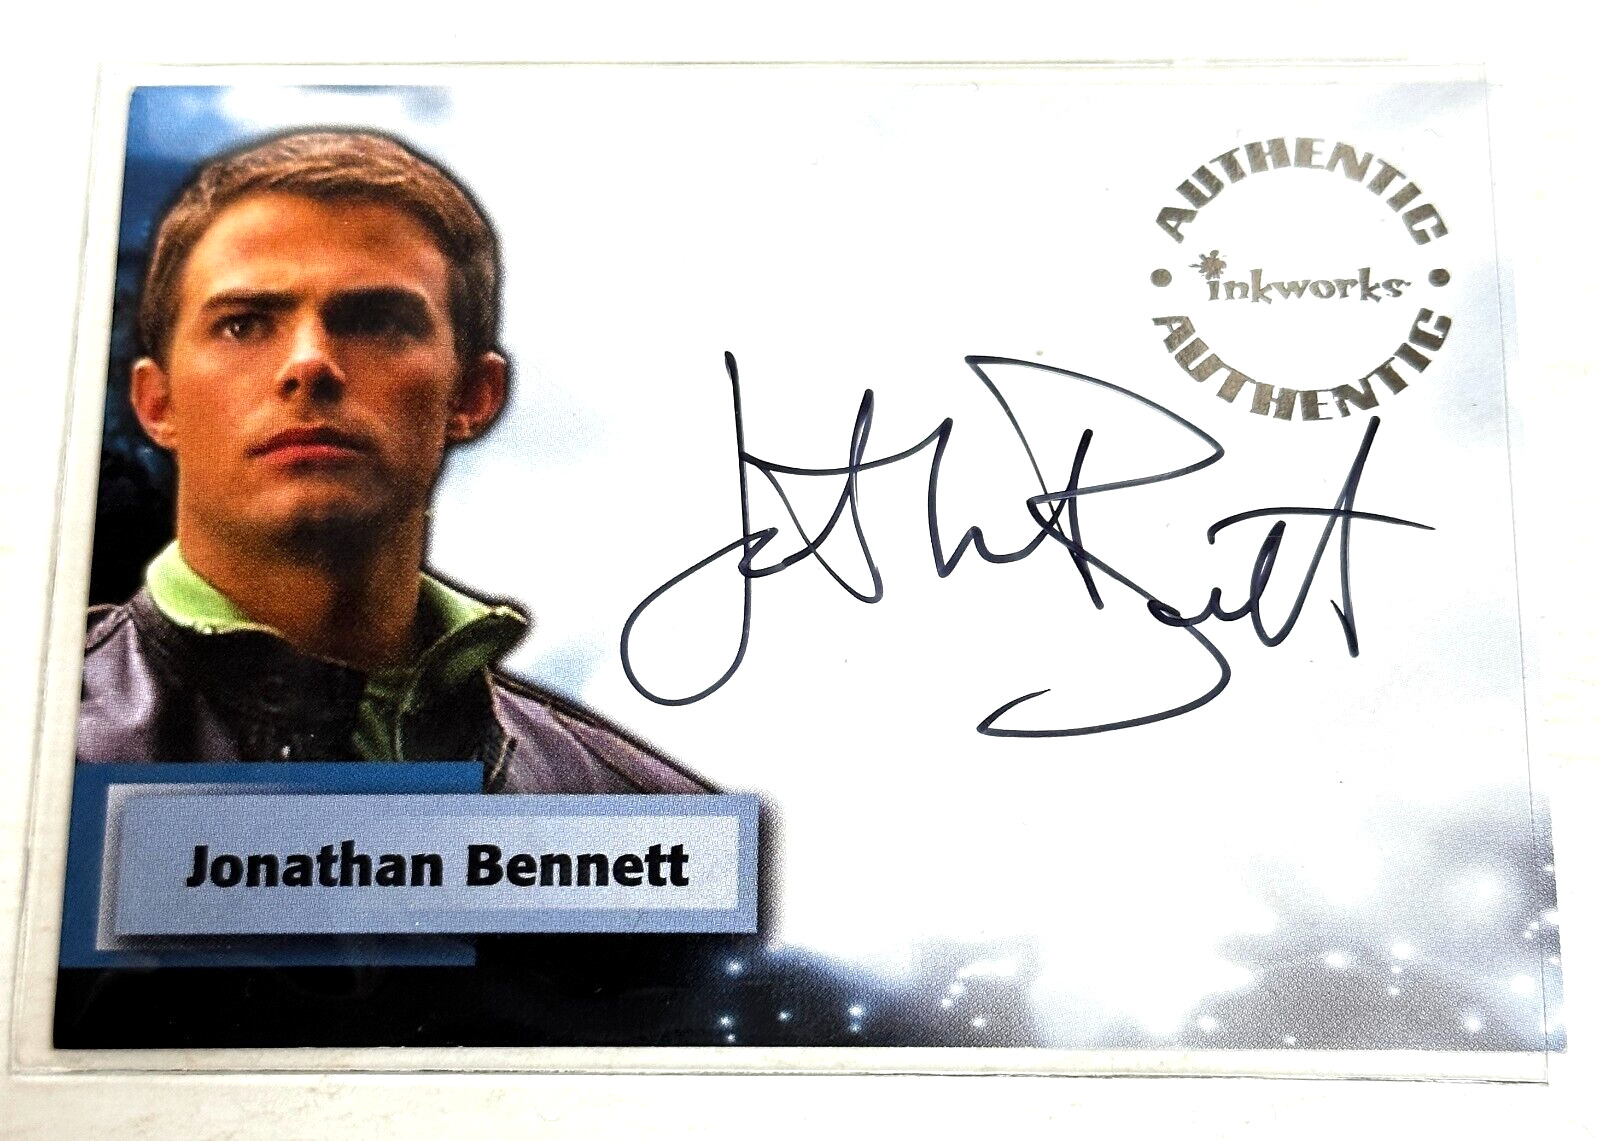 2005 Smallville Season 4 Autograph Card Signed by Jonathan Bennett (Kevin Grady)